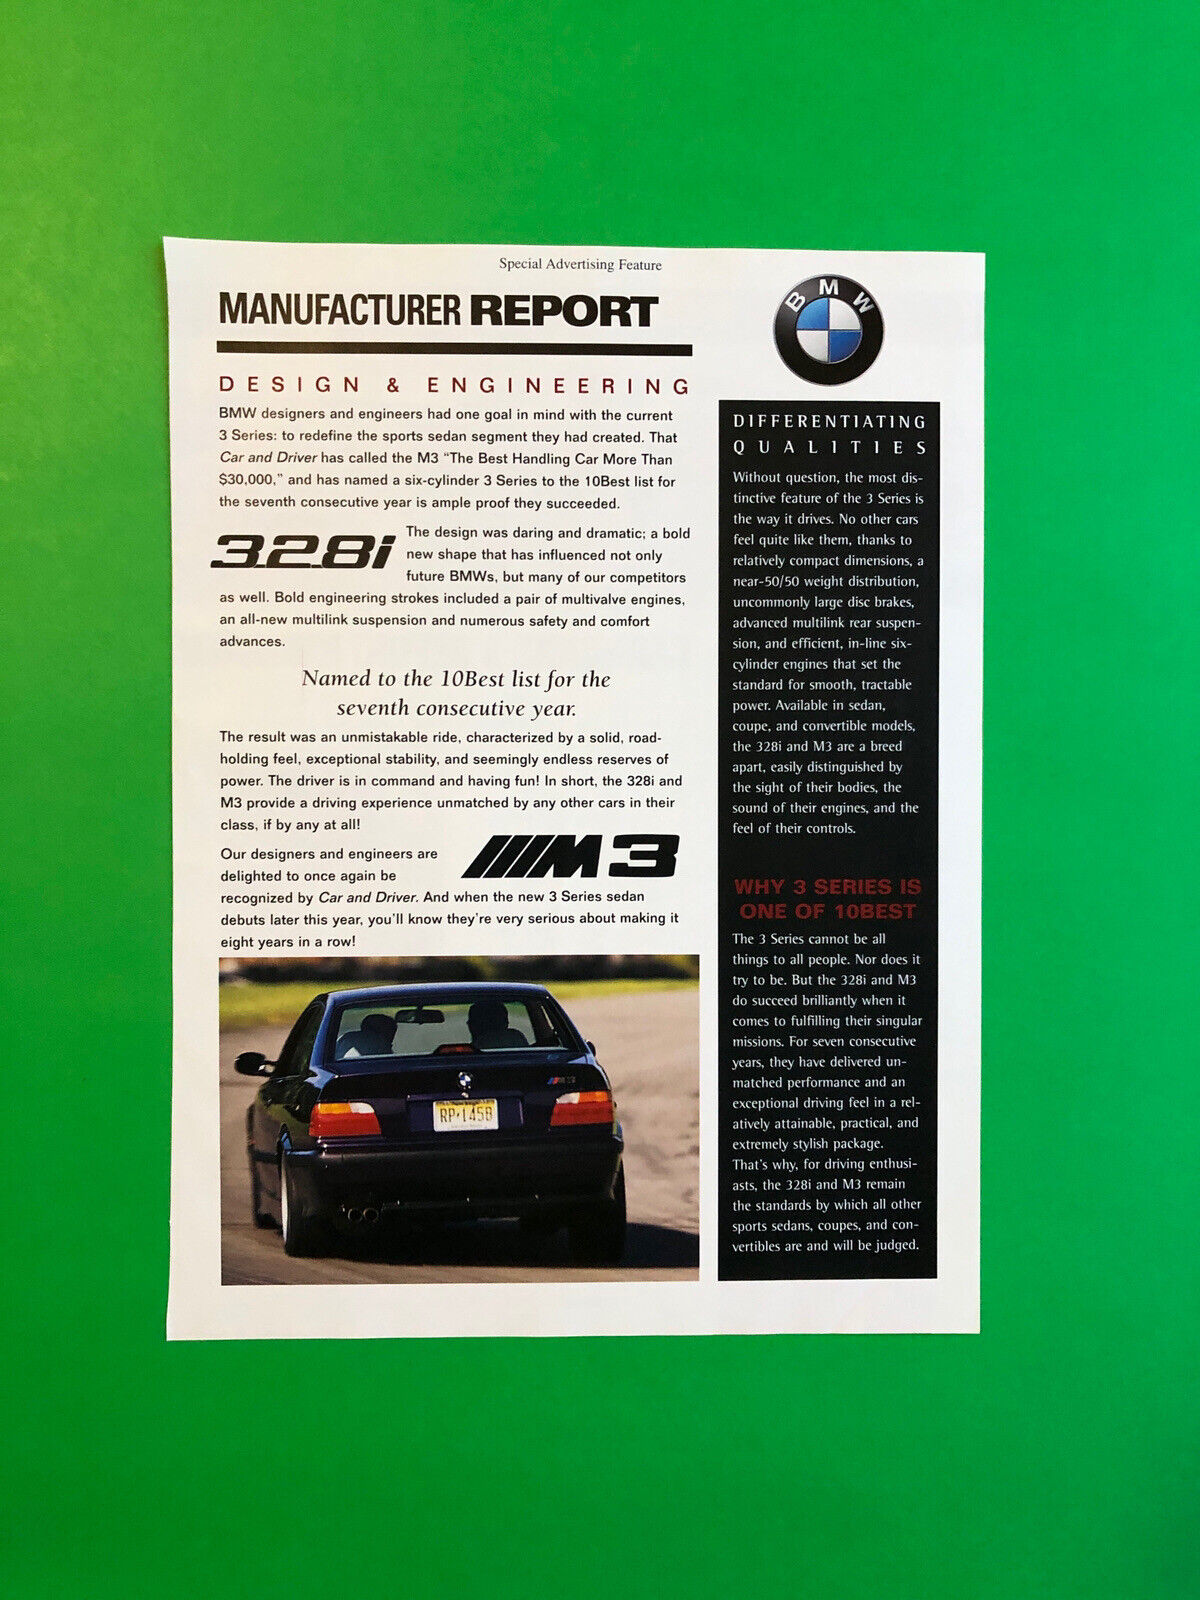 1998 BMW M3 328i ORIGINAL VINTAGE PRINT AD ADVERTISEMENT